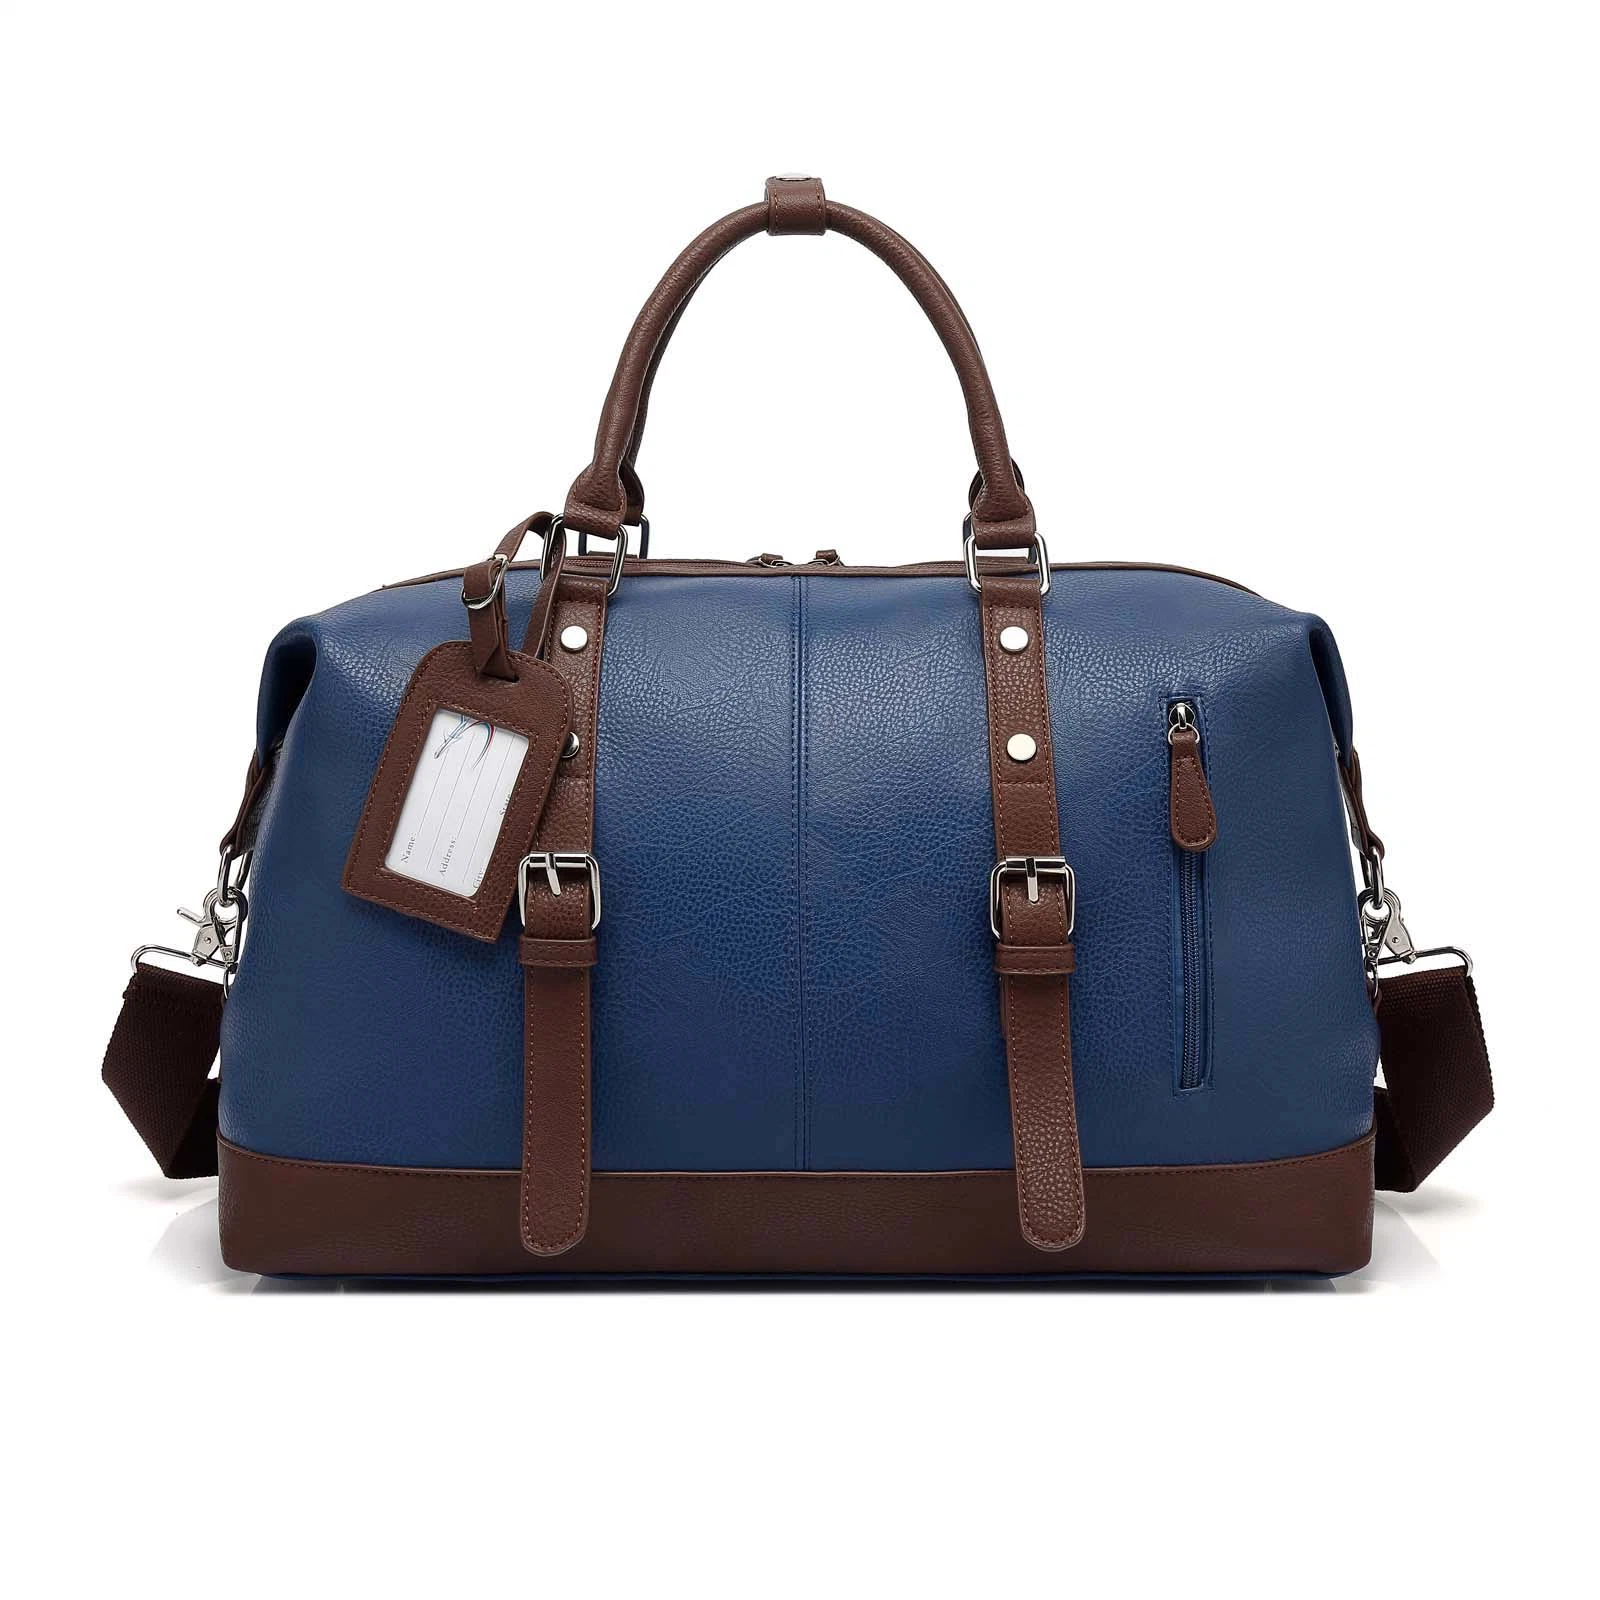 High Quality New Classic Leather Fashion Handbag Tote Weekend Travel Bag